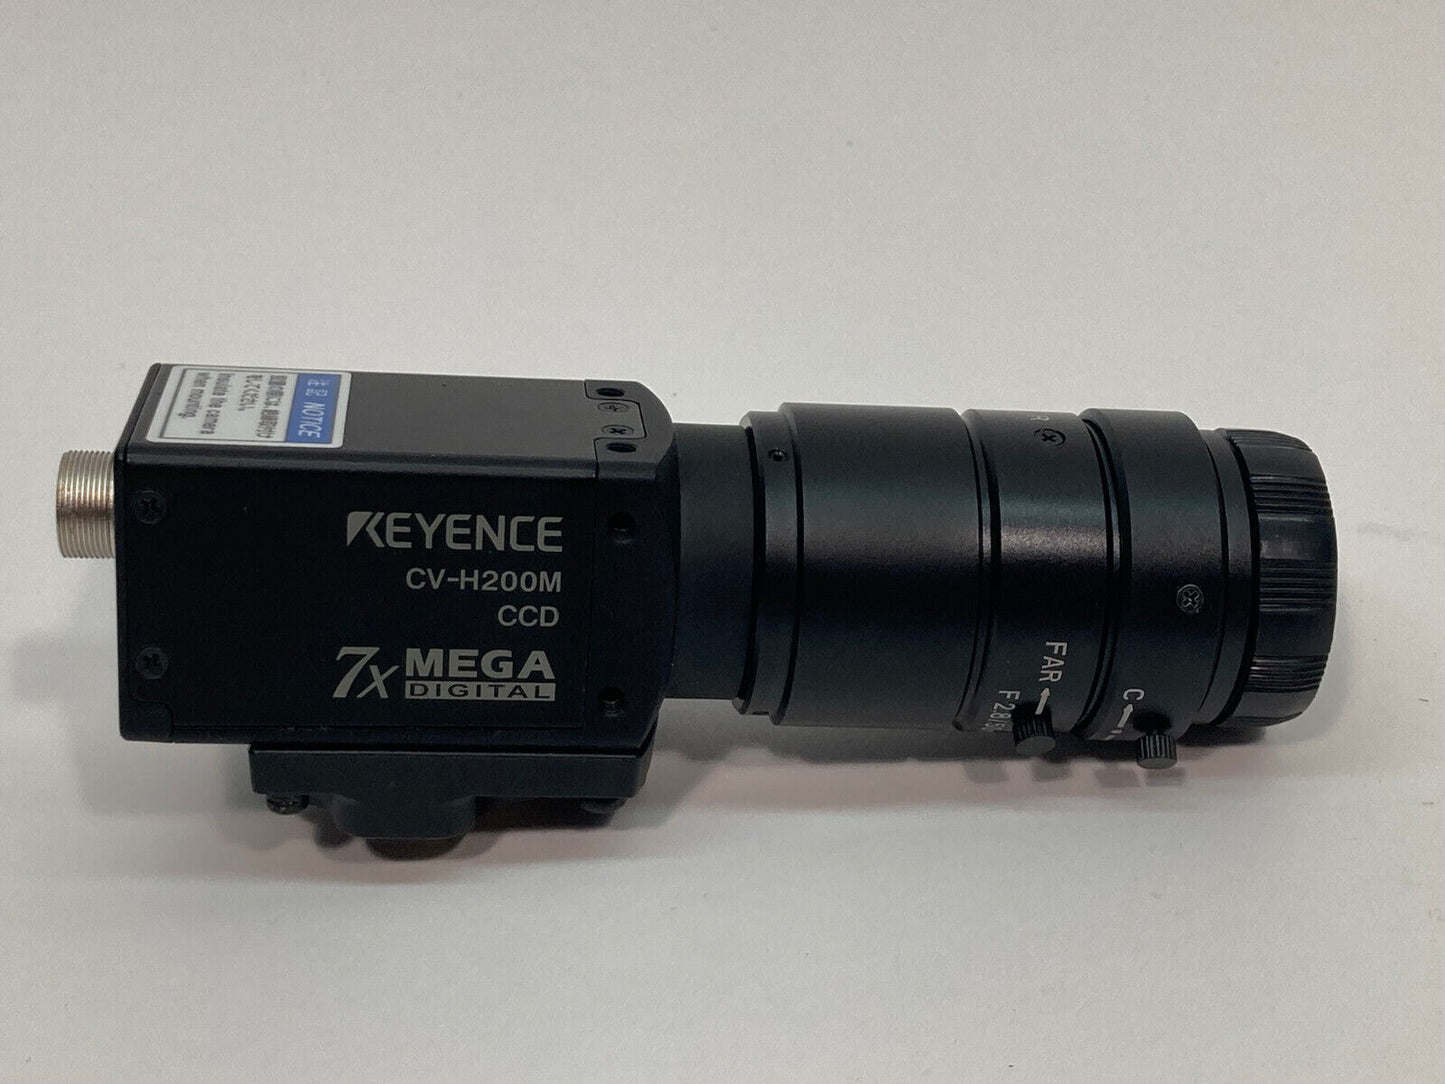 New Keyence CV-H200M Camera,  7X Mega Digital w/ F2.8/50MM Lens